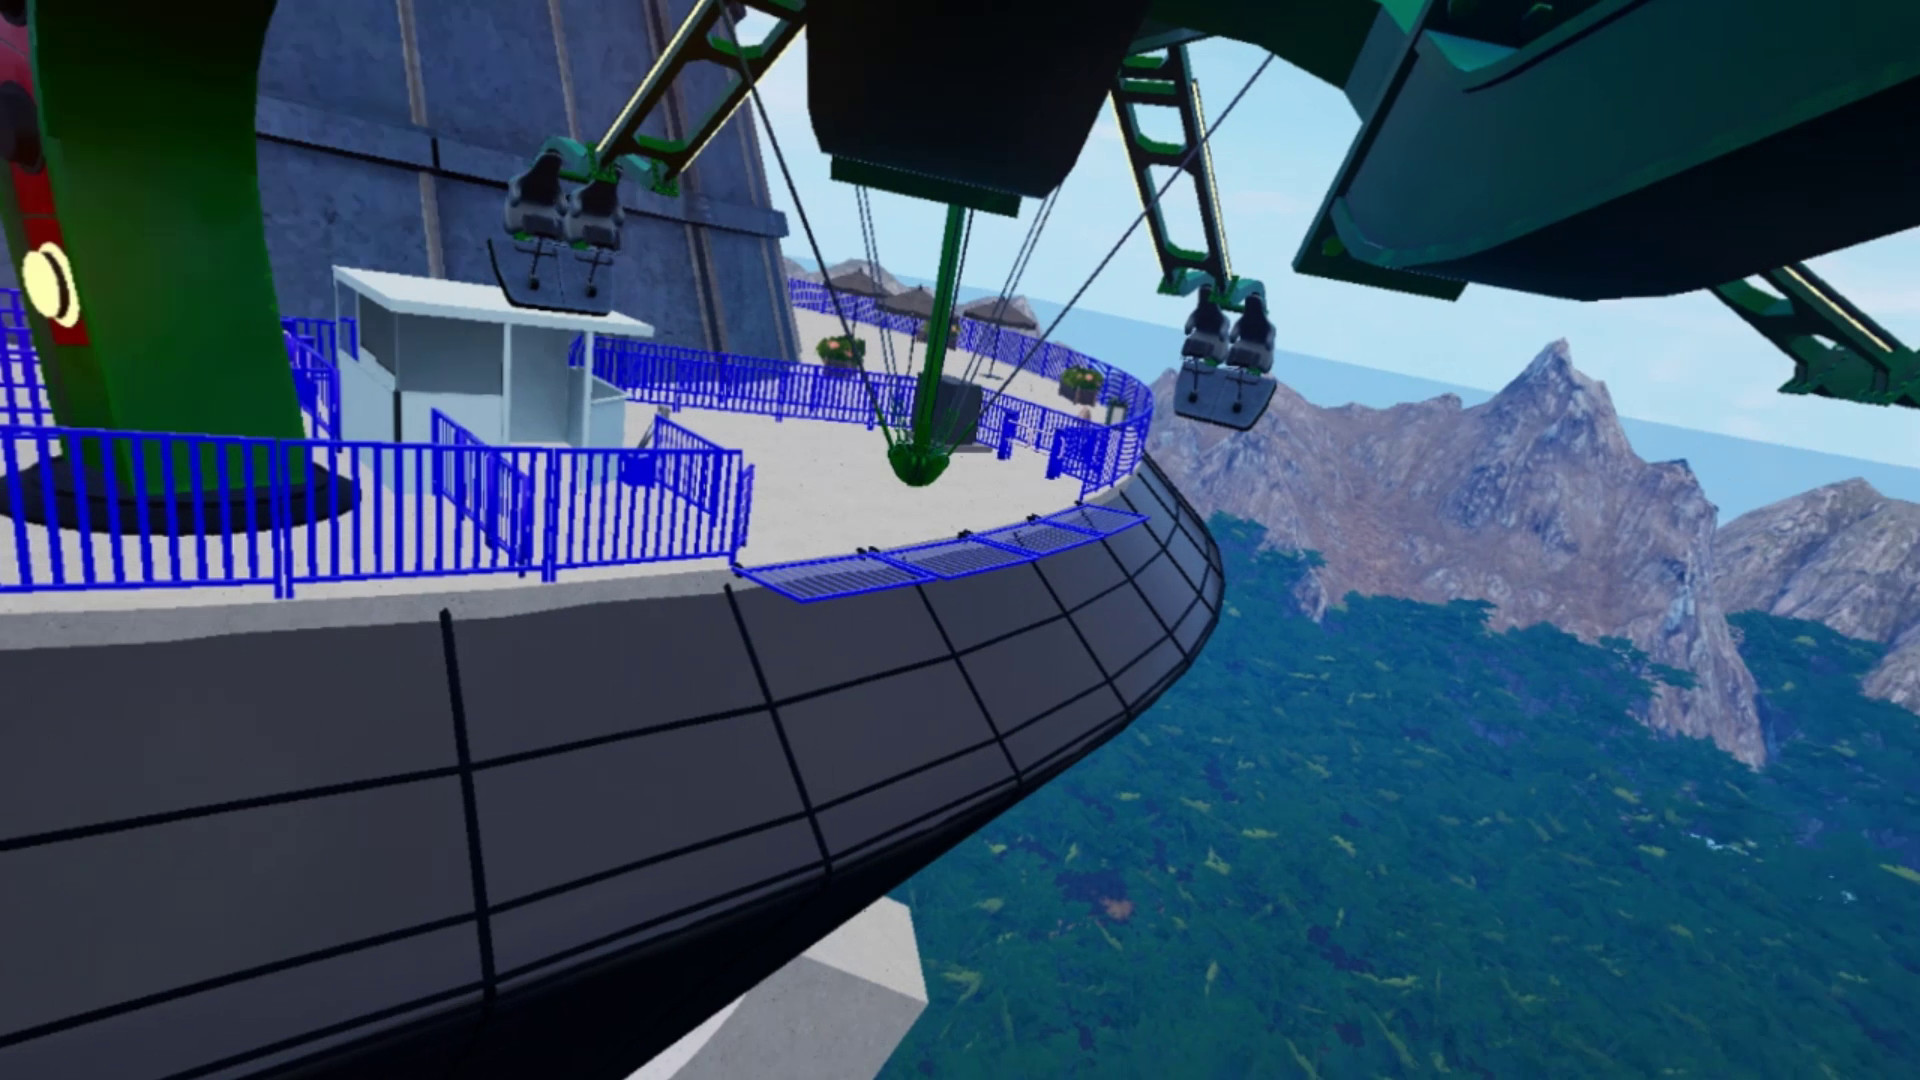 Vr ride. RIDEOP: Thrill Ride Simulator. RIDEOP. VR Arena. RIDEOP: Thrill Ride Simulator Pico 4.